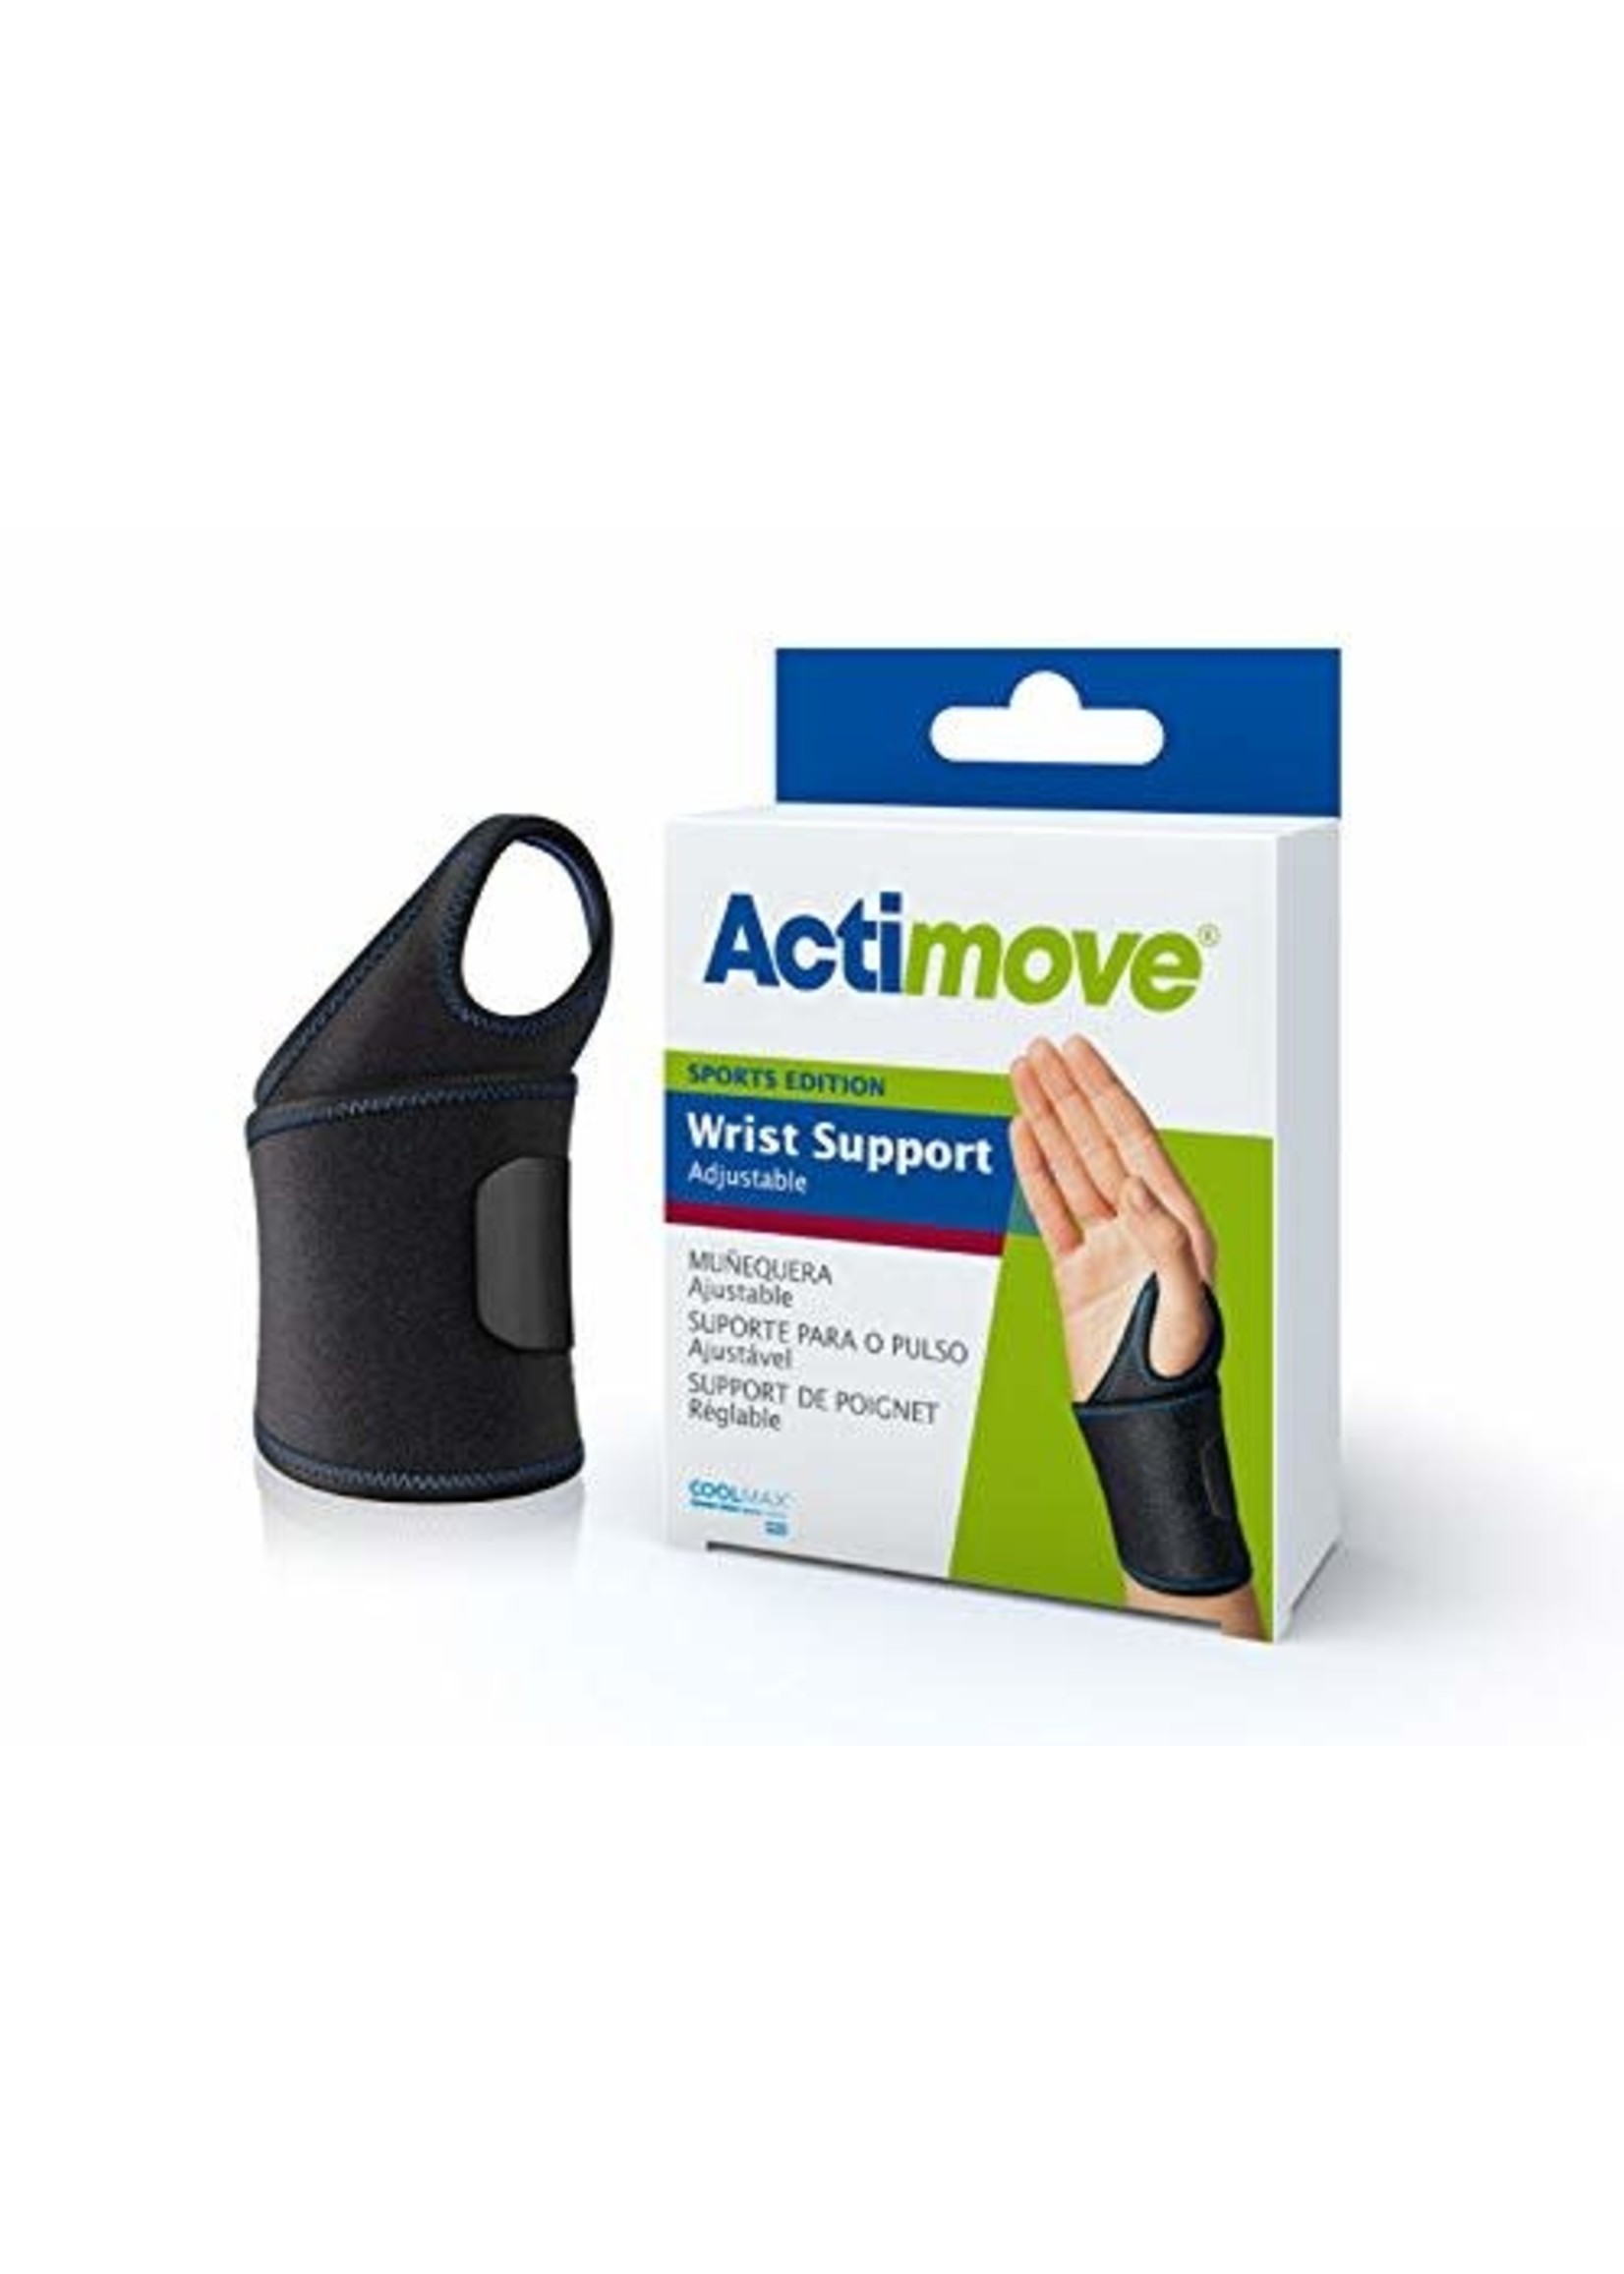 ActiMove Adjustable Wrist Support - Sport Edition